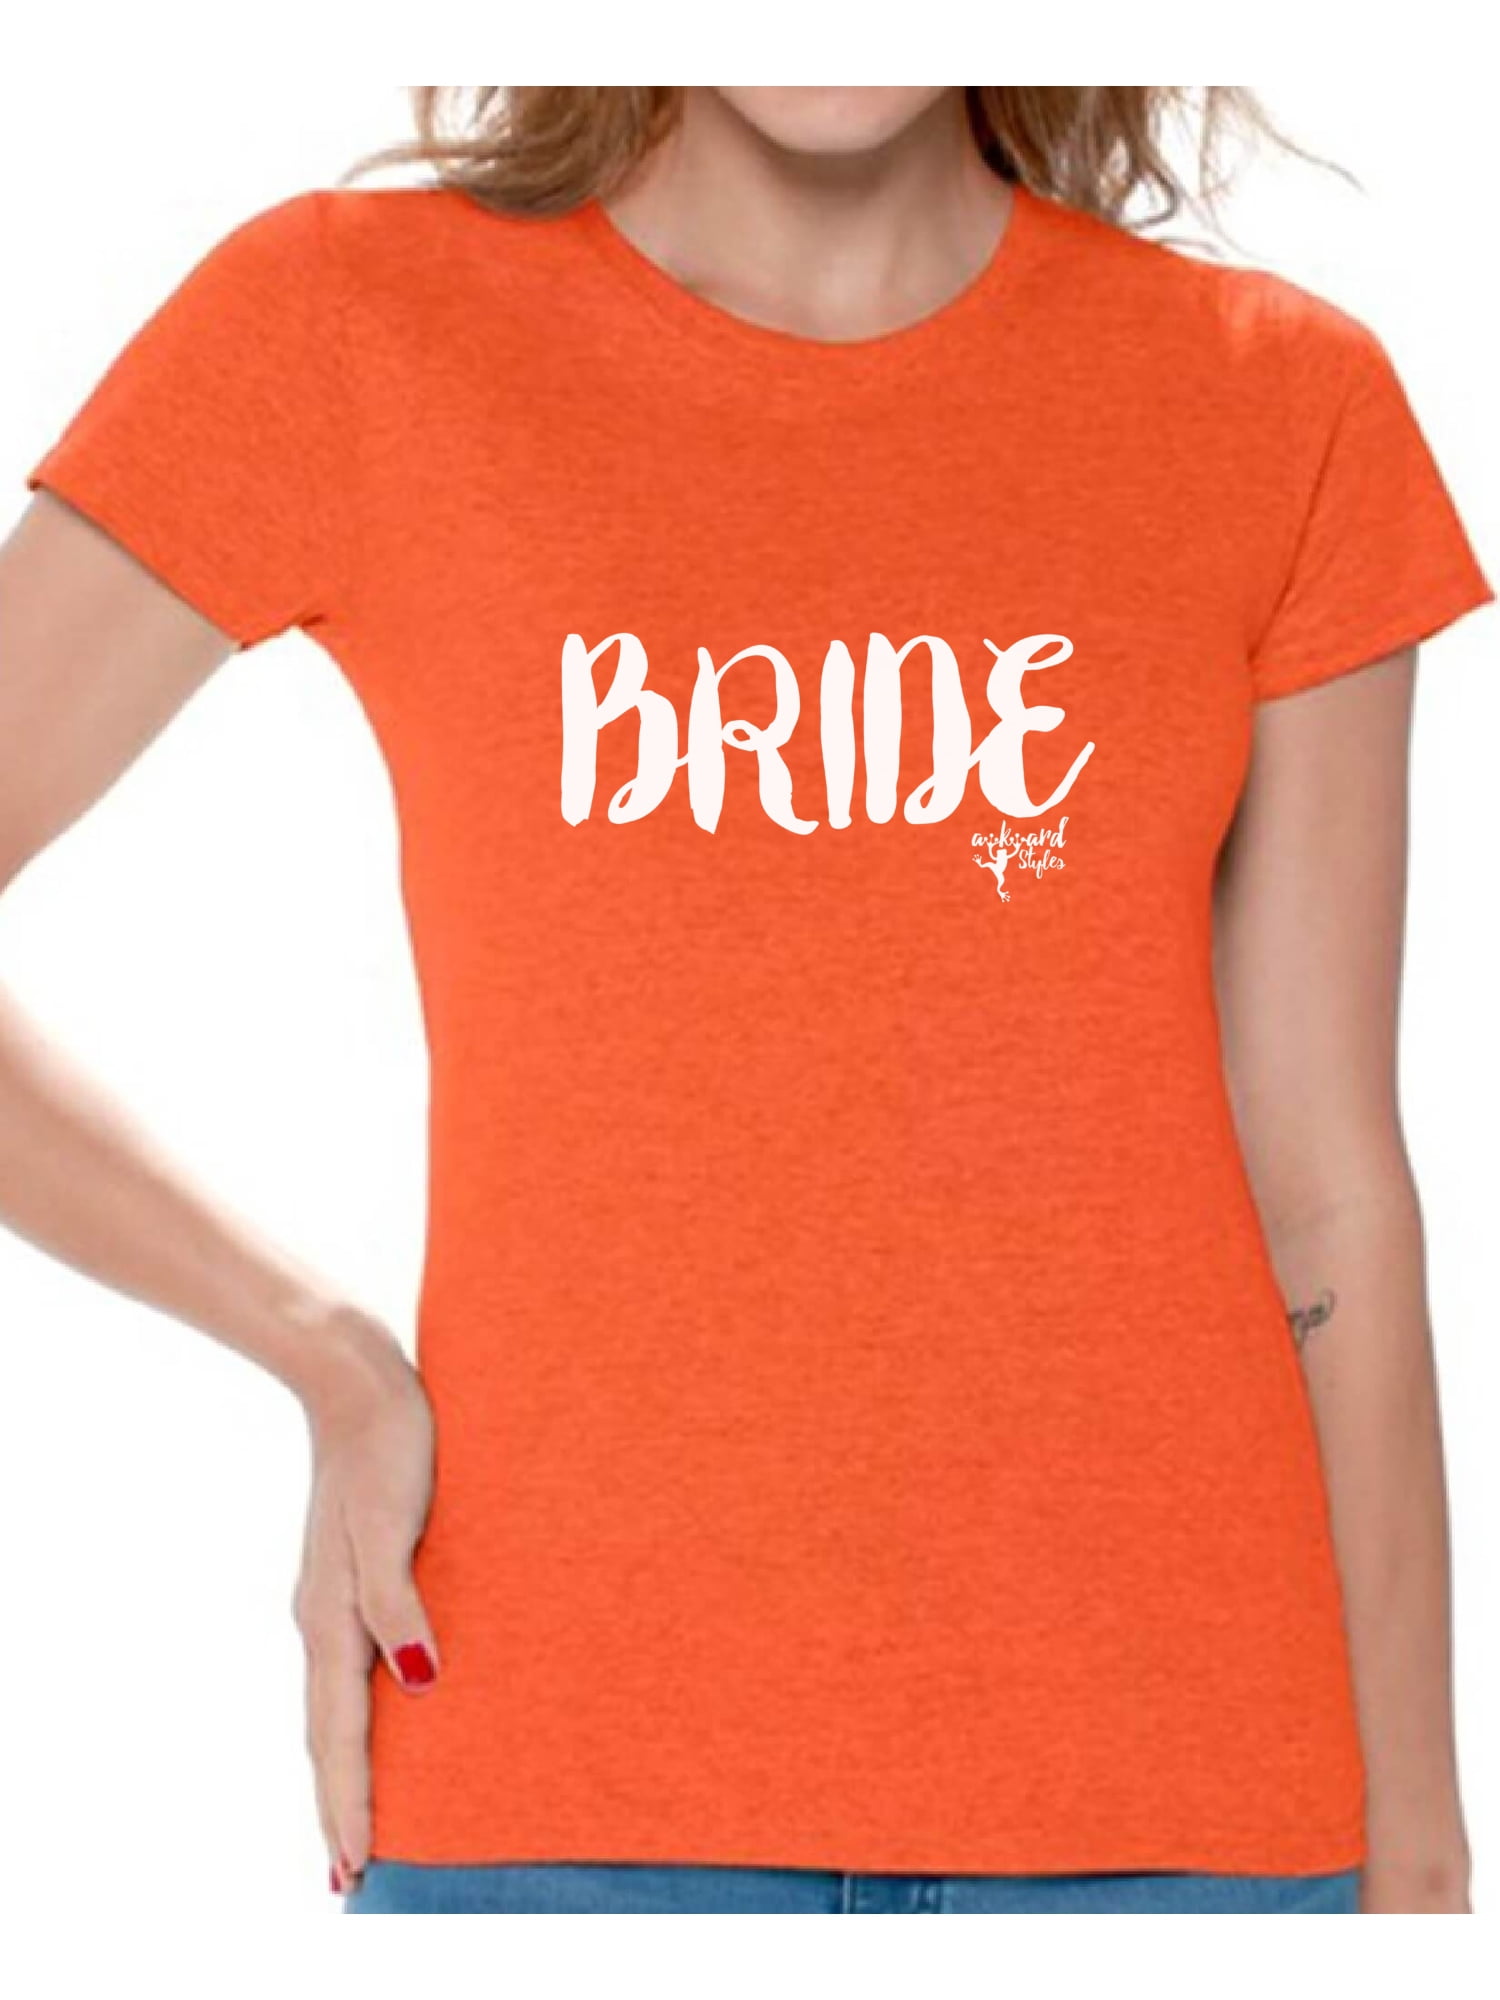 Gold Bride Women's T-Shirt Wedding Marriage Bachelorette Party Shirts 